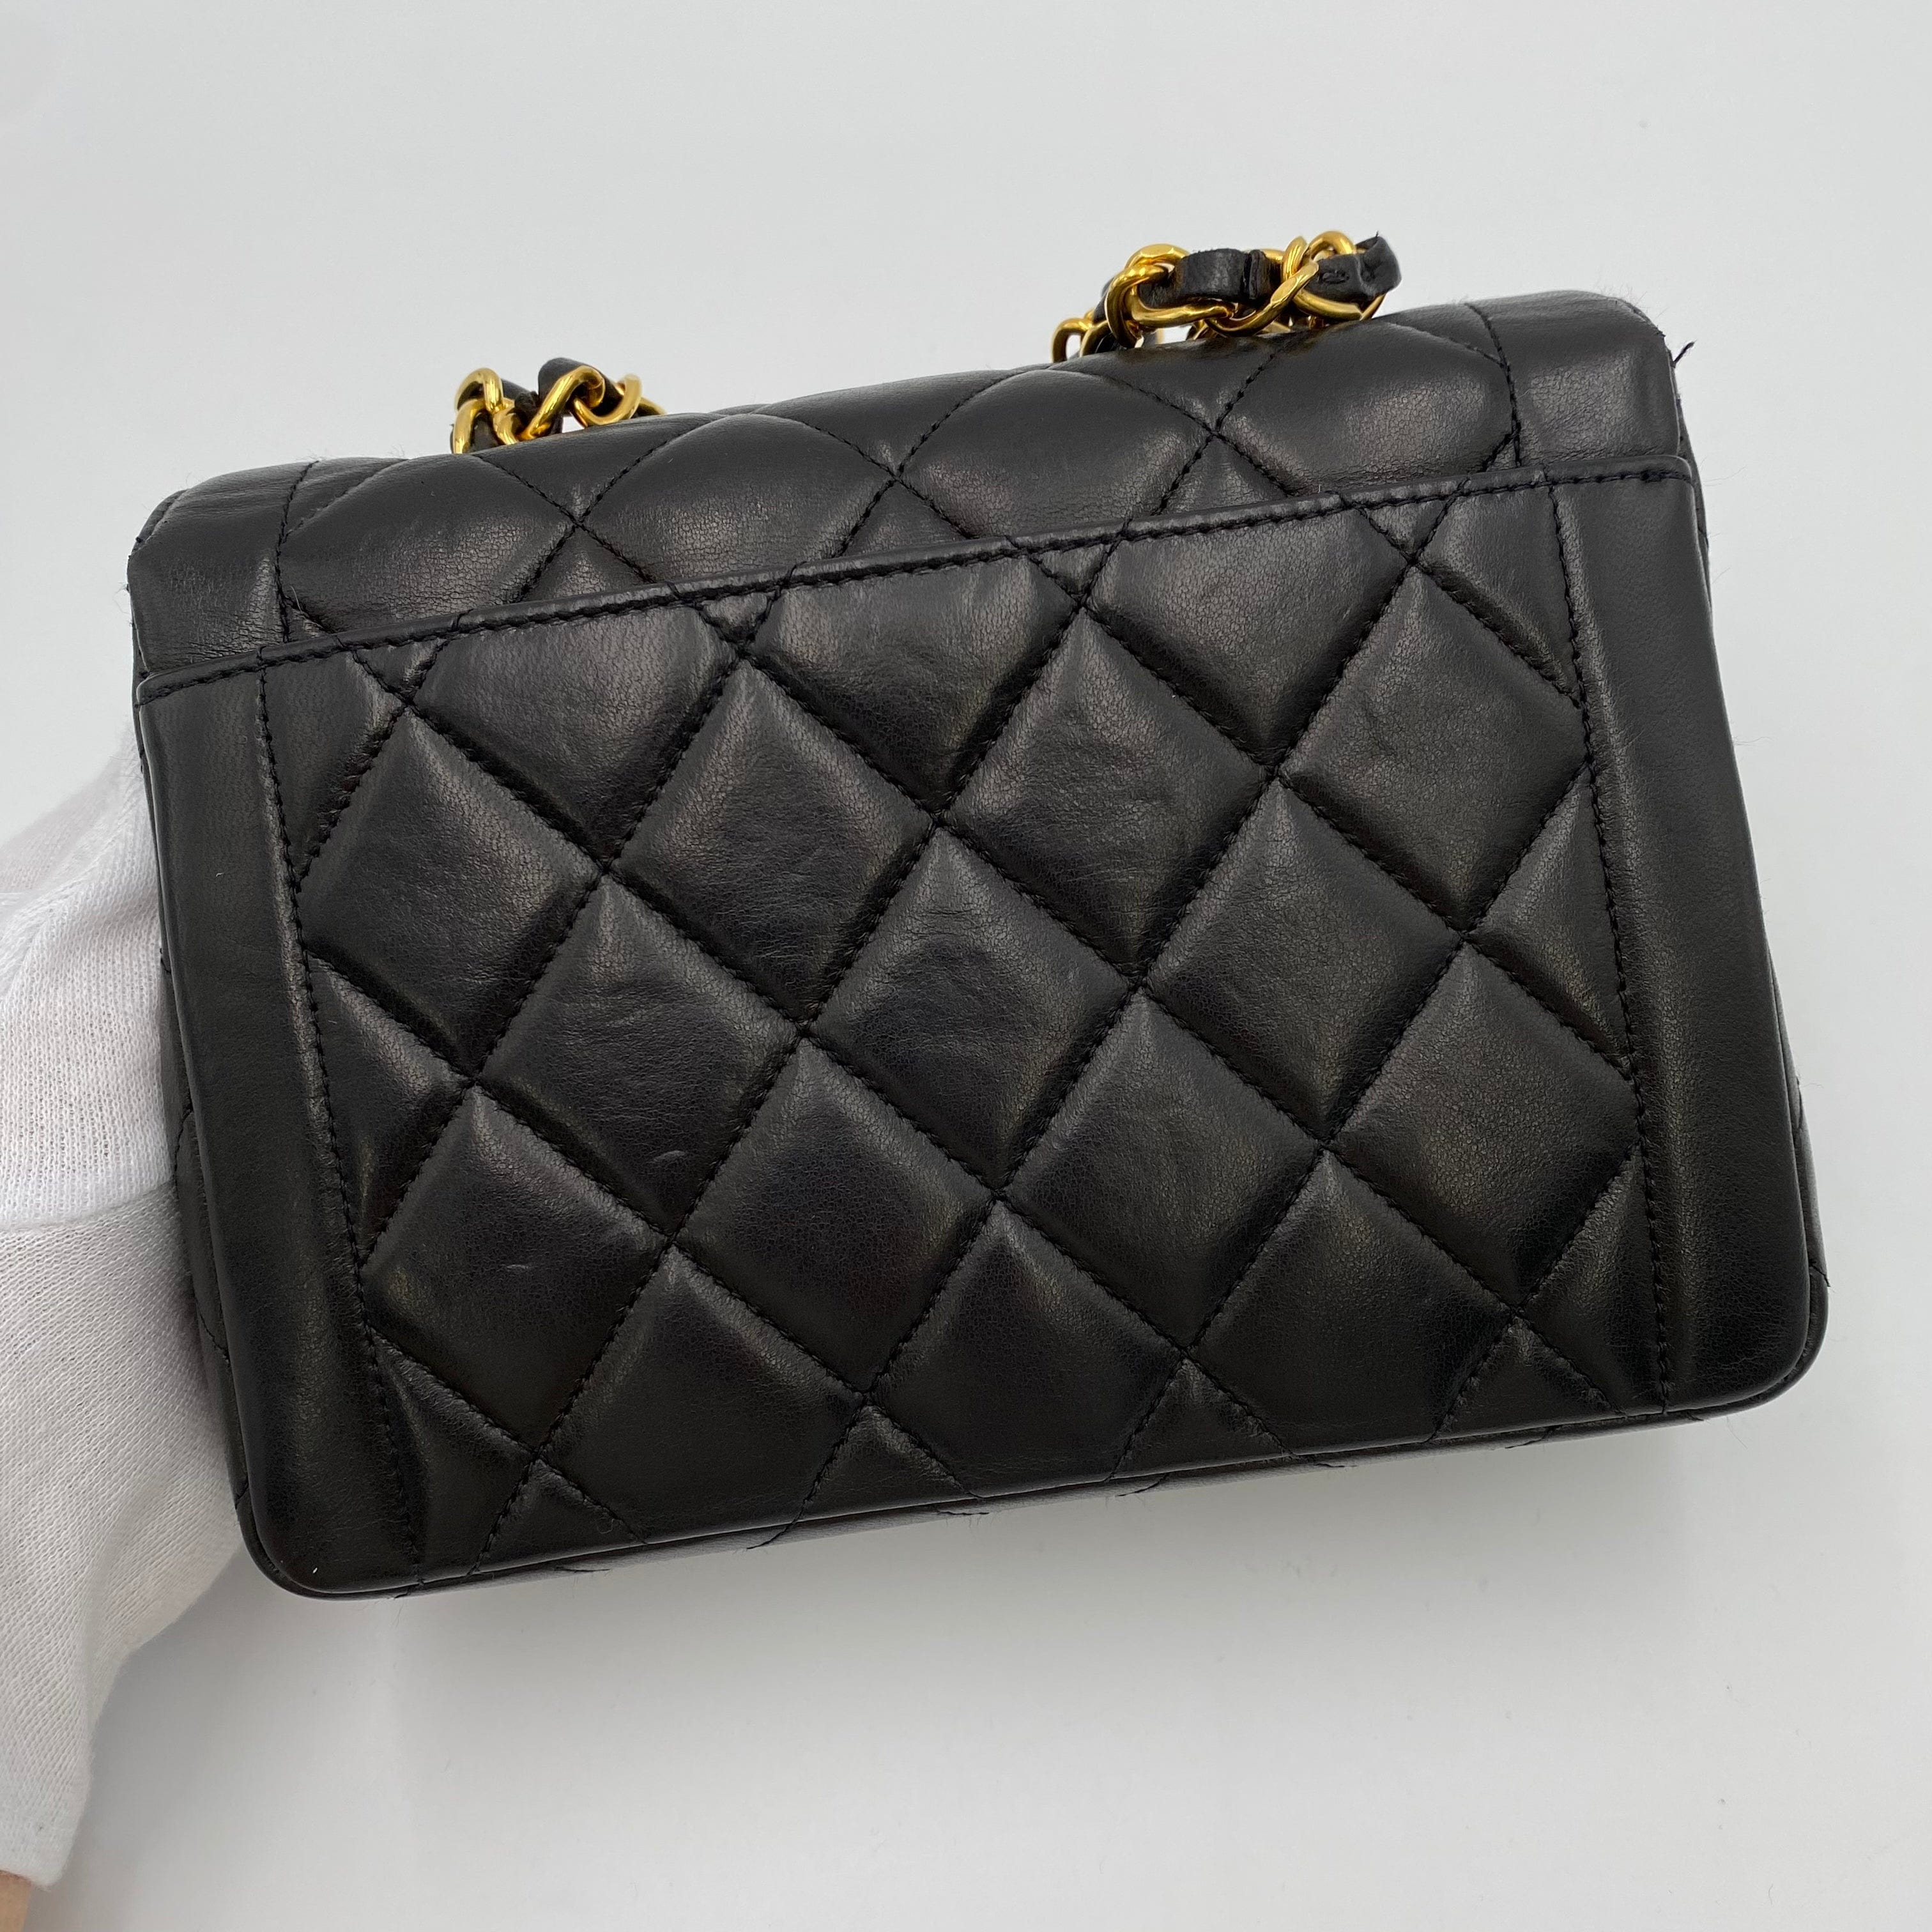 Chanel CHANEL VINTAGE MINI CHAIN HAND BAG BLACK LAMB SKIN